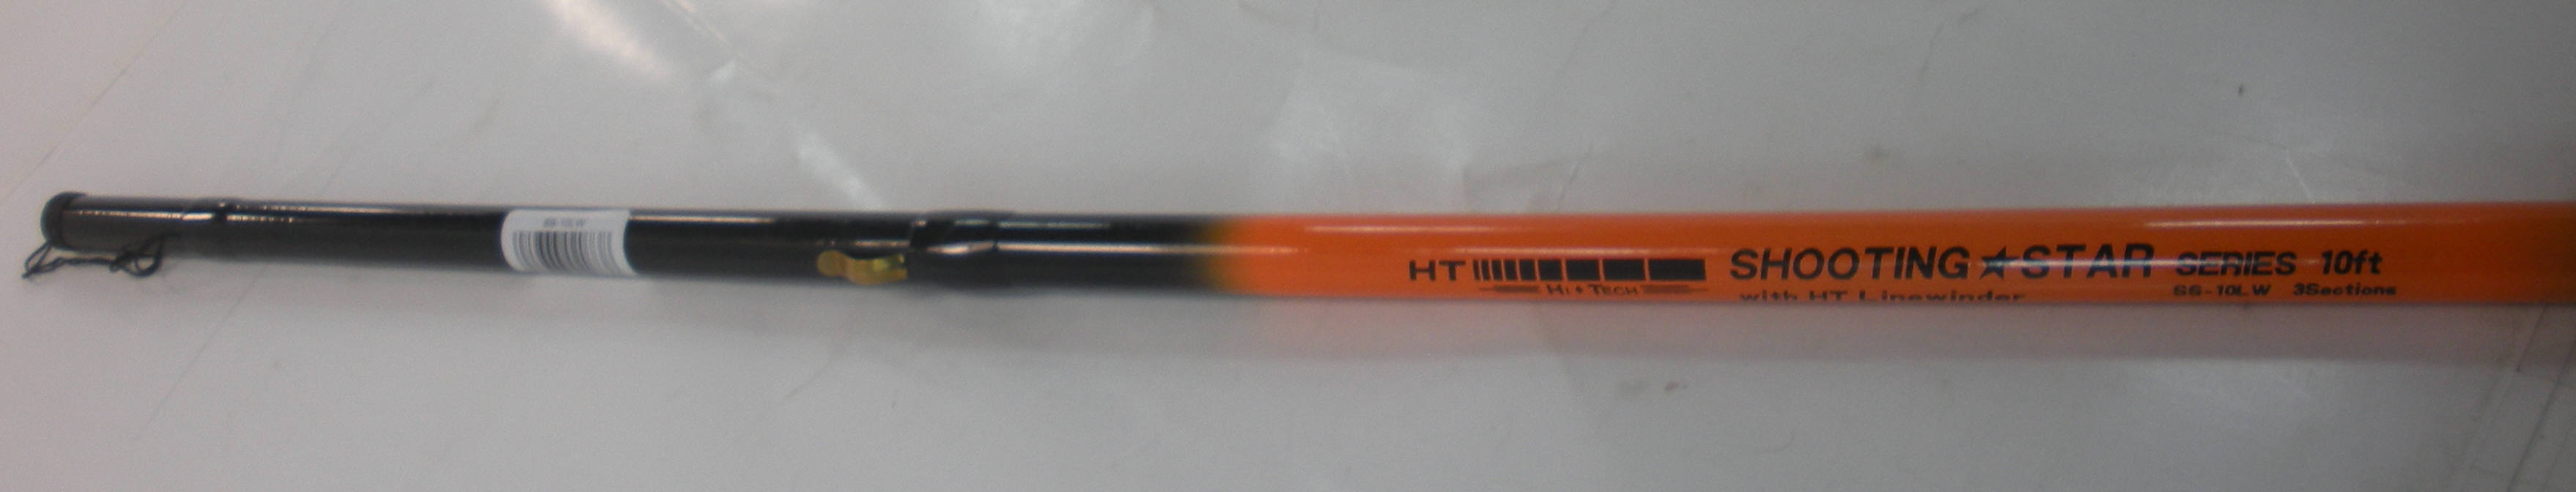 Hi-Tech SS-10LW Shooting Star Pole 3 Piece 10 Ft 19597 29333020738 | eBay